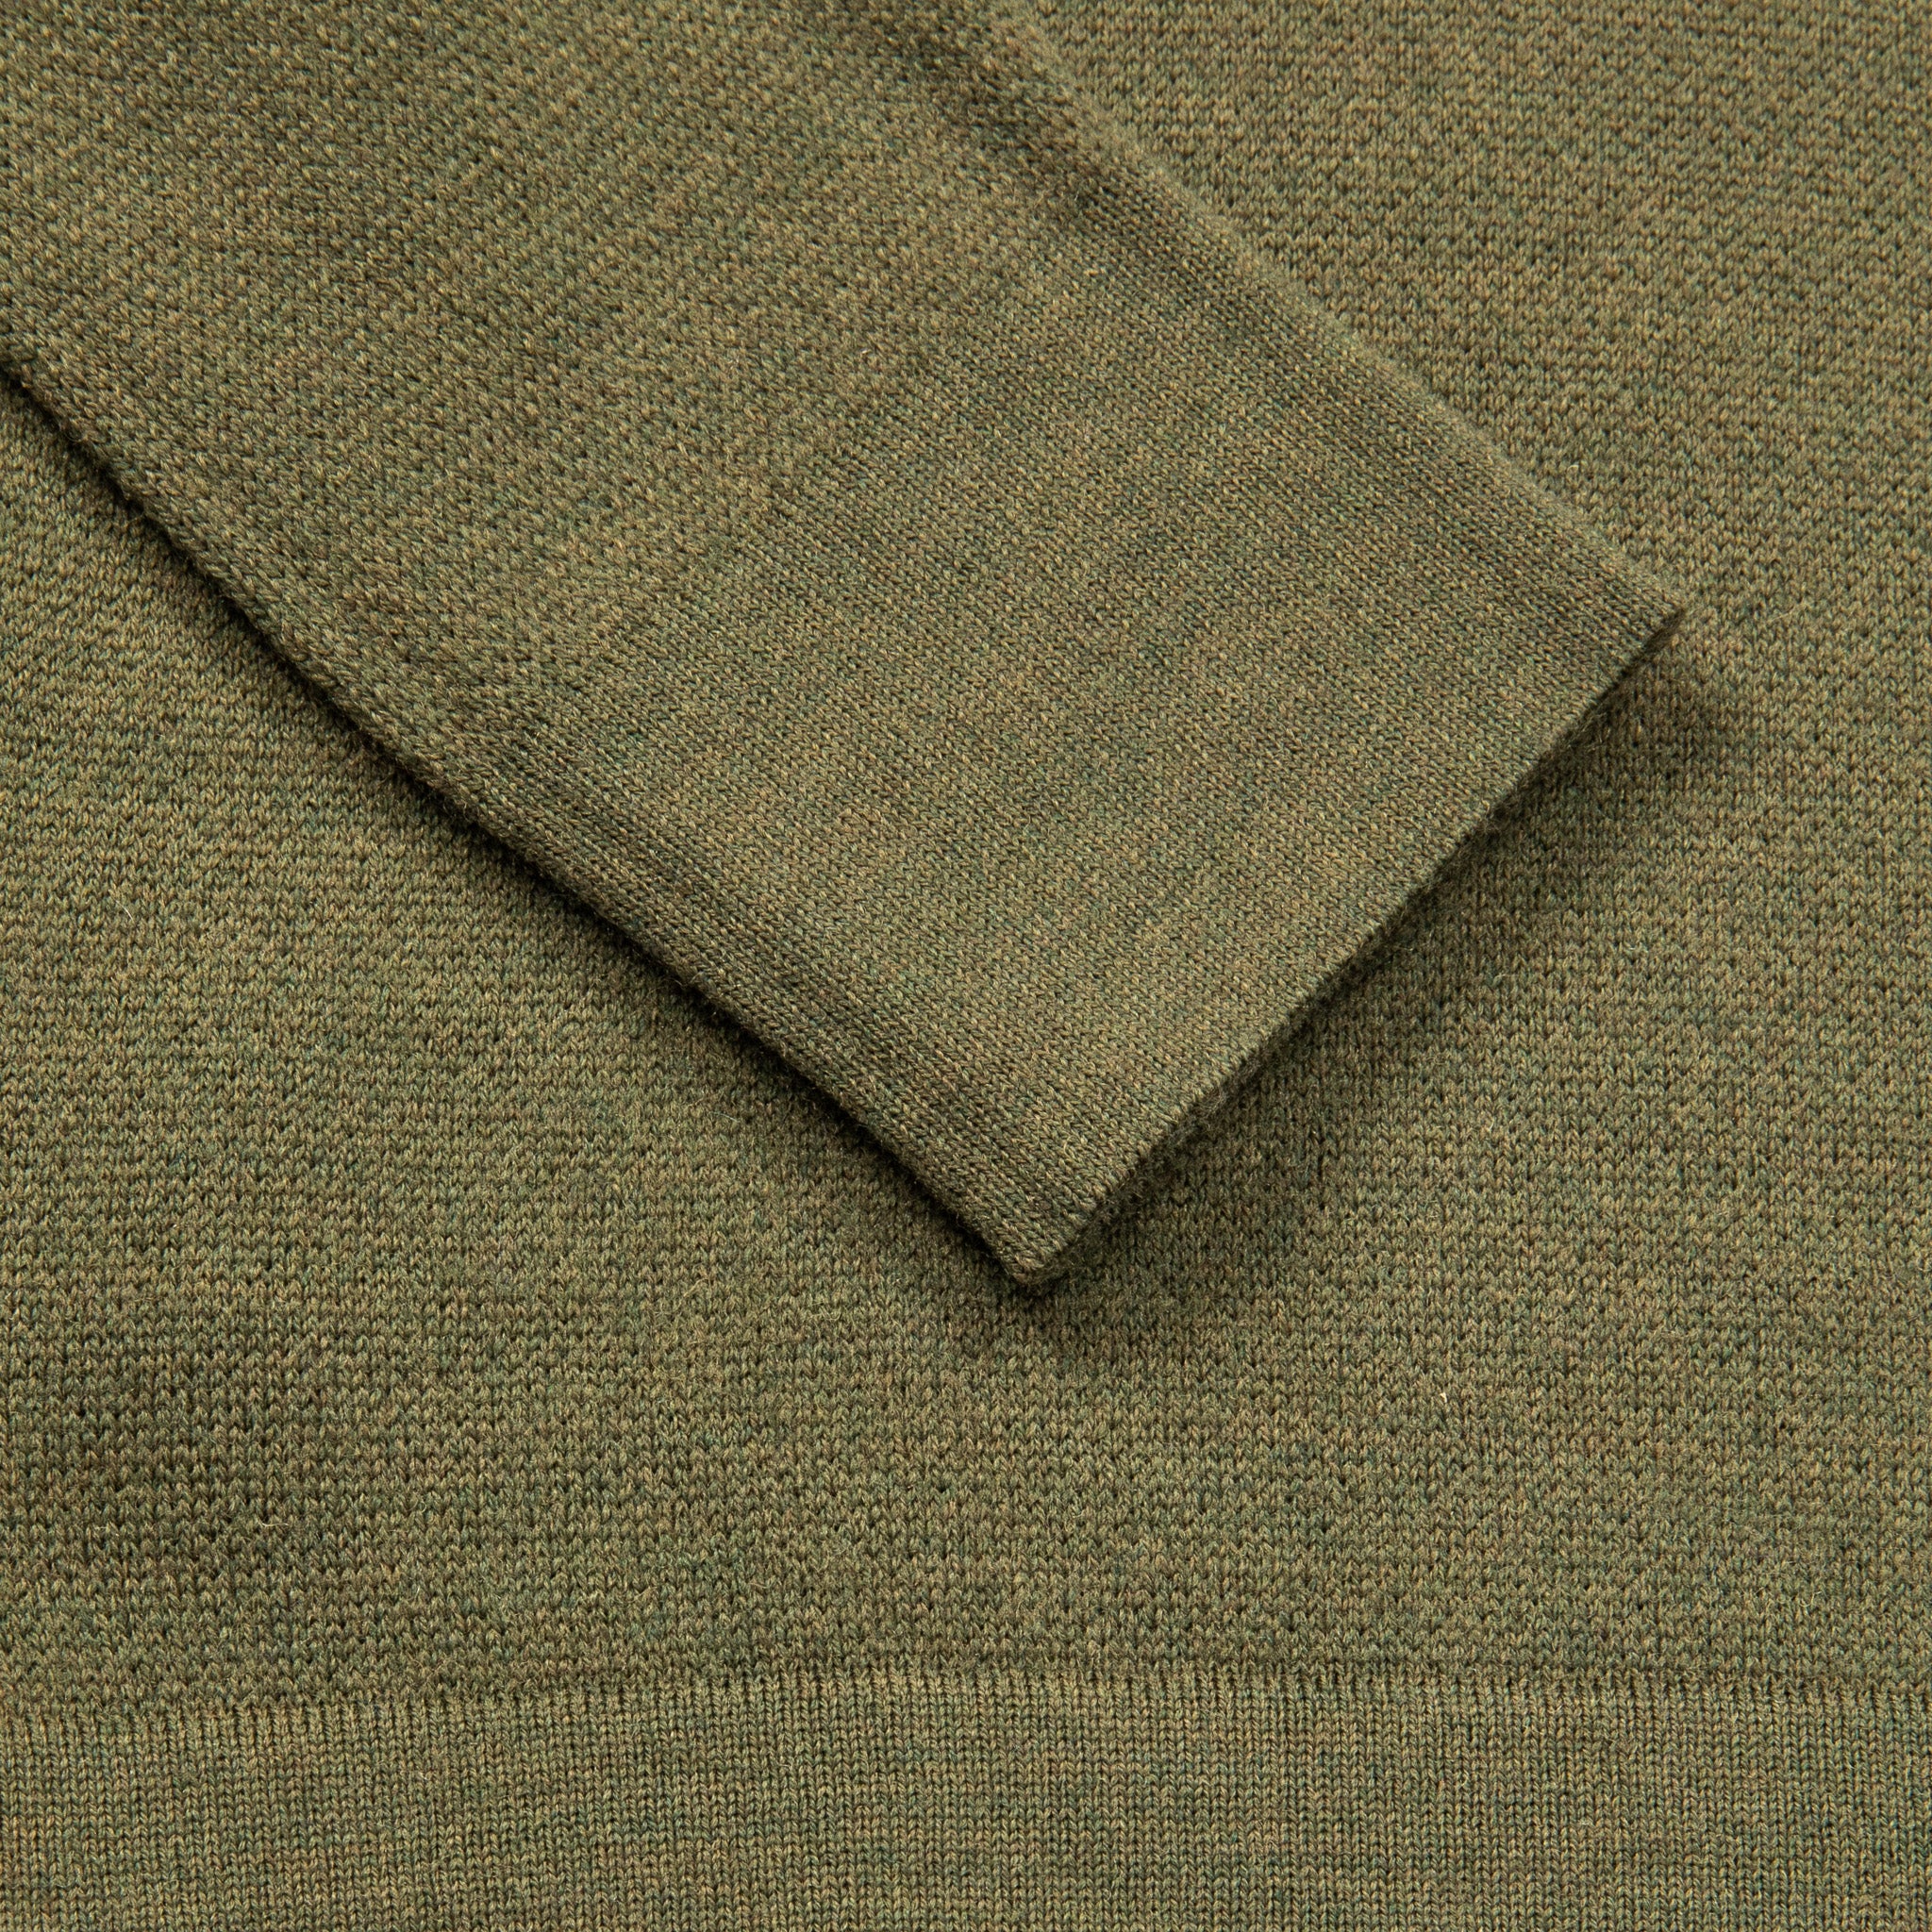 William Lockie Birdseye Solid Merino Wool Polo Olive